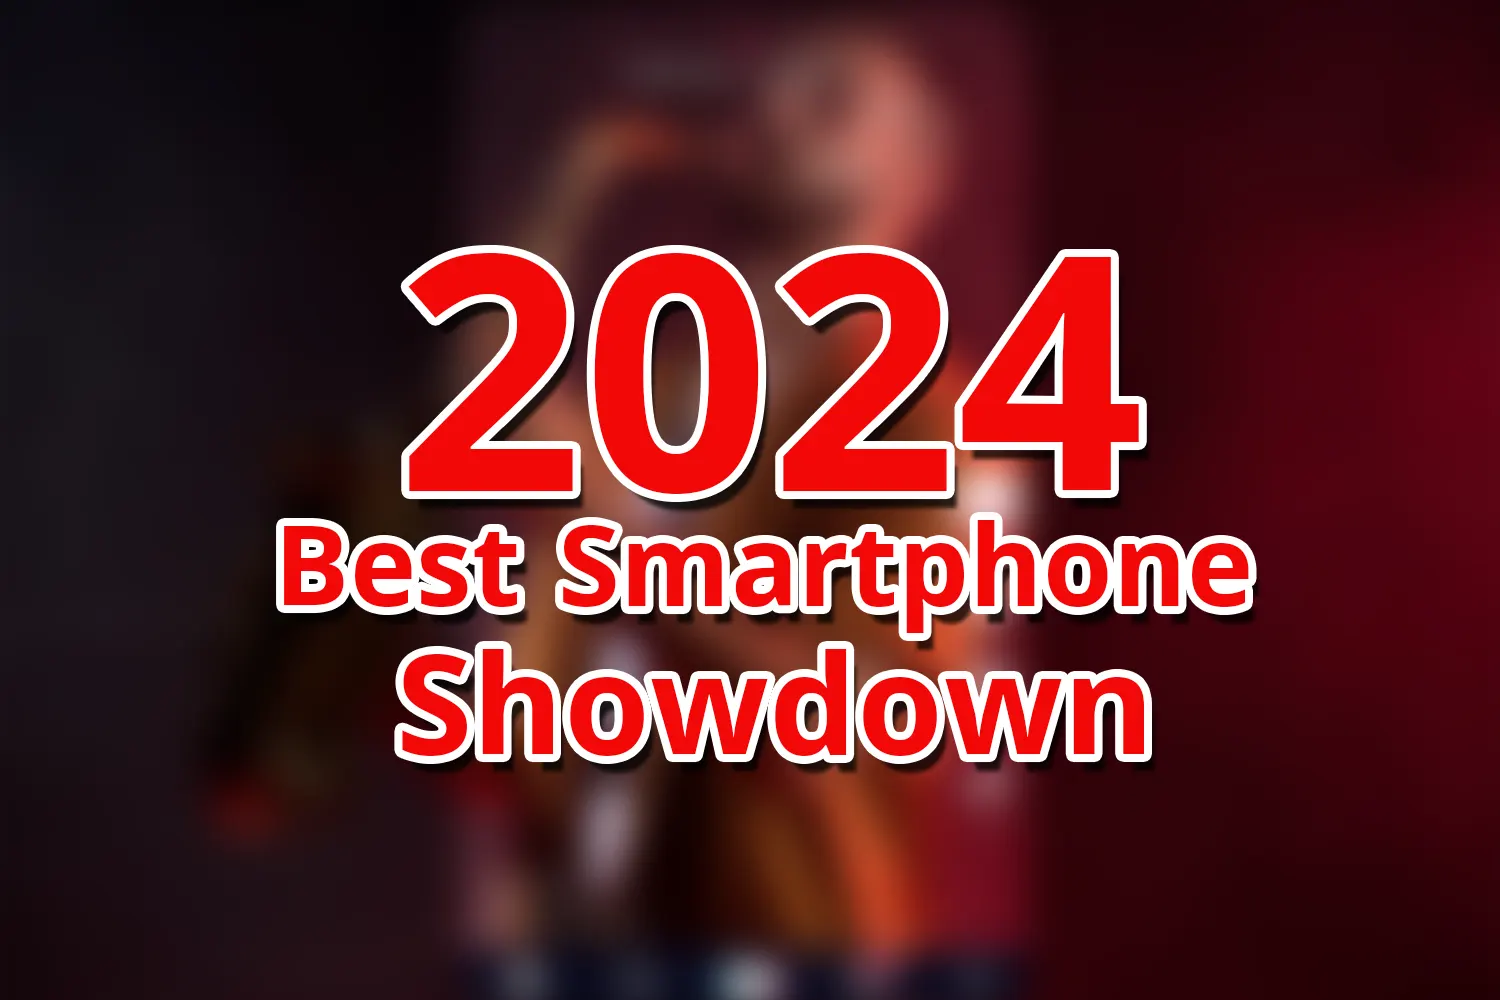 Best smartphone showdown 2024